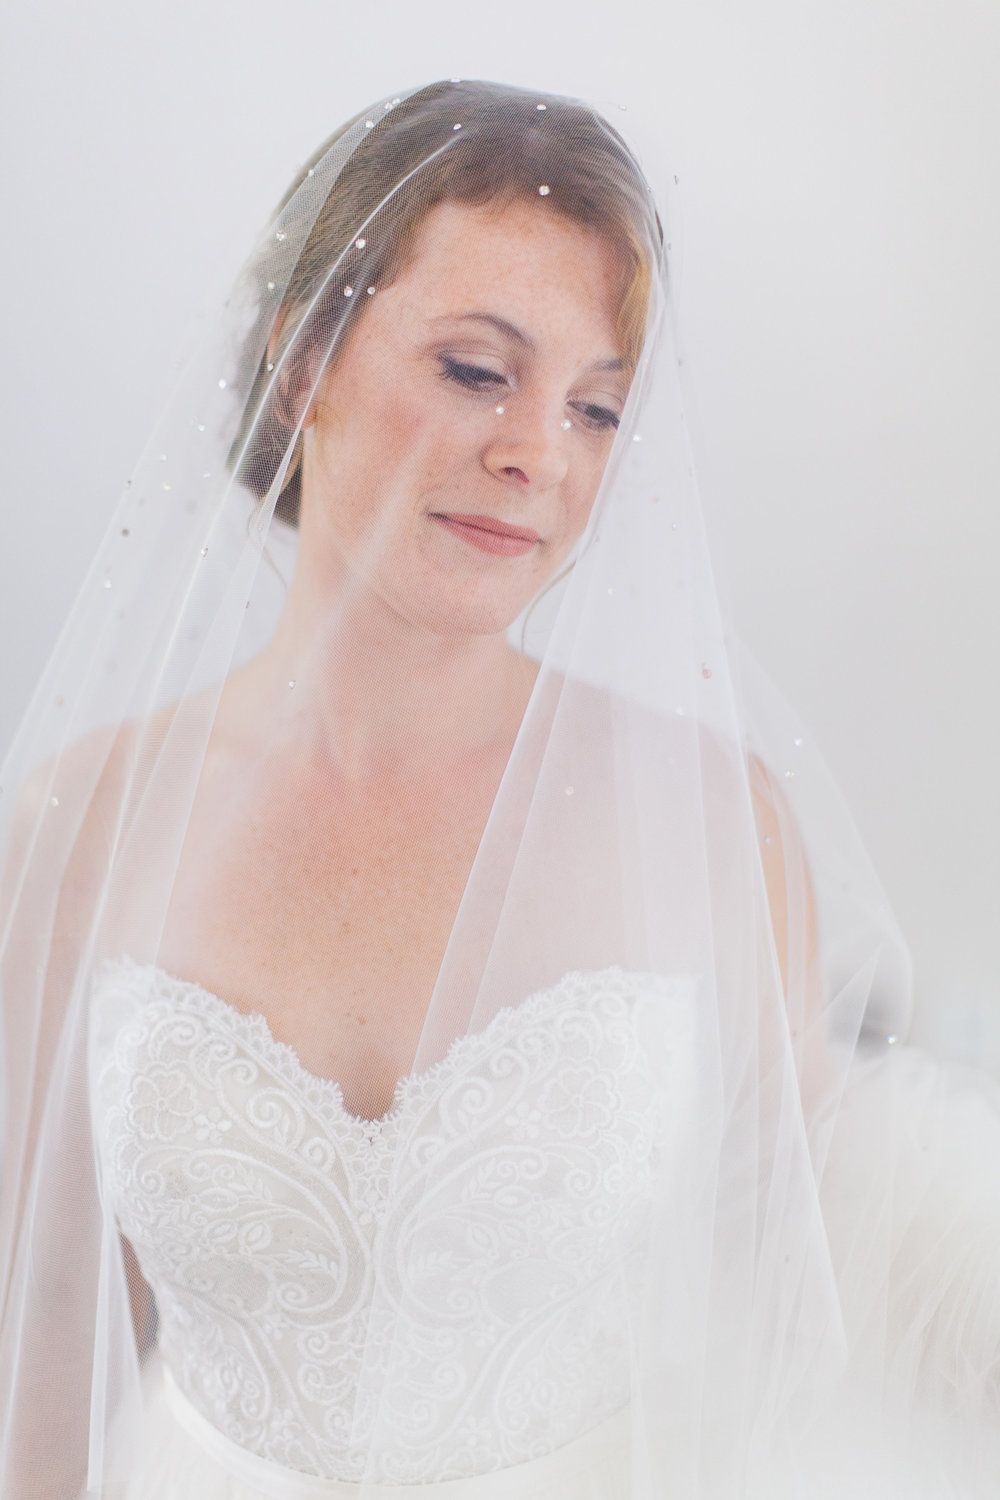 Crystal/rhinestone Wedding Veil With Blusher, Chapel & Cathedral Bridal  Drop Veil 